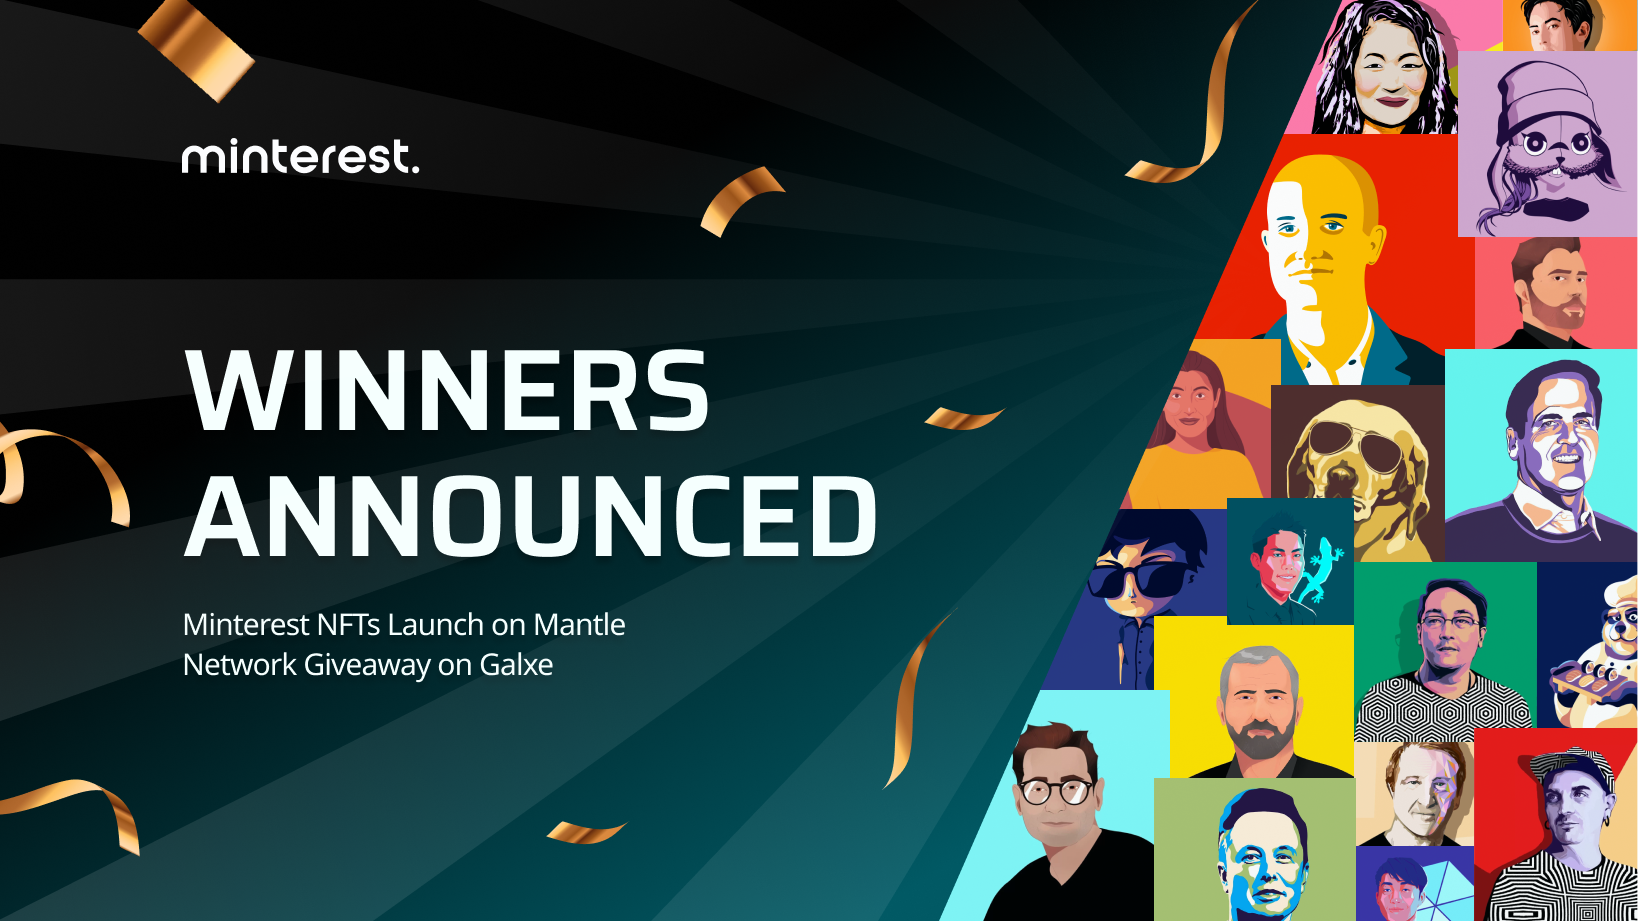 Minterest NFT winners announced